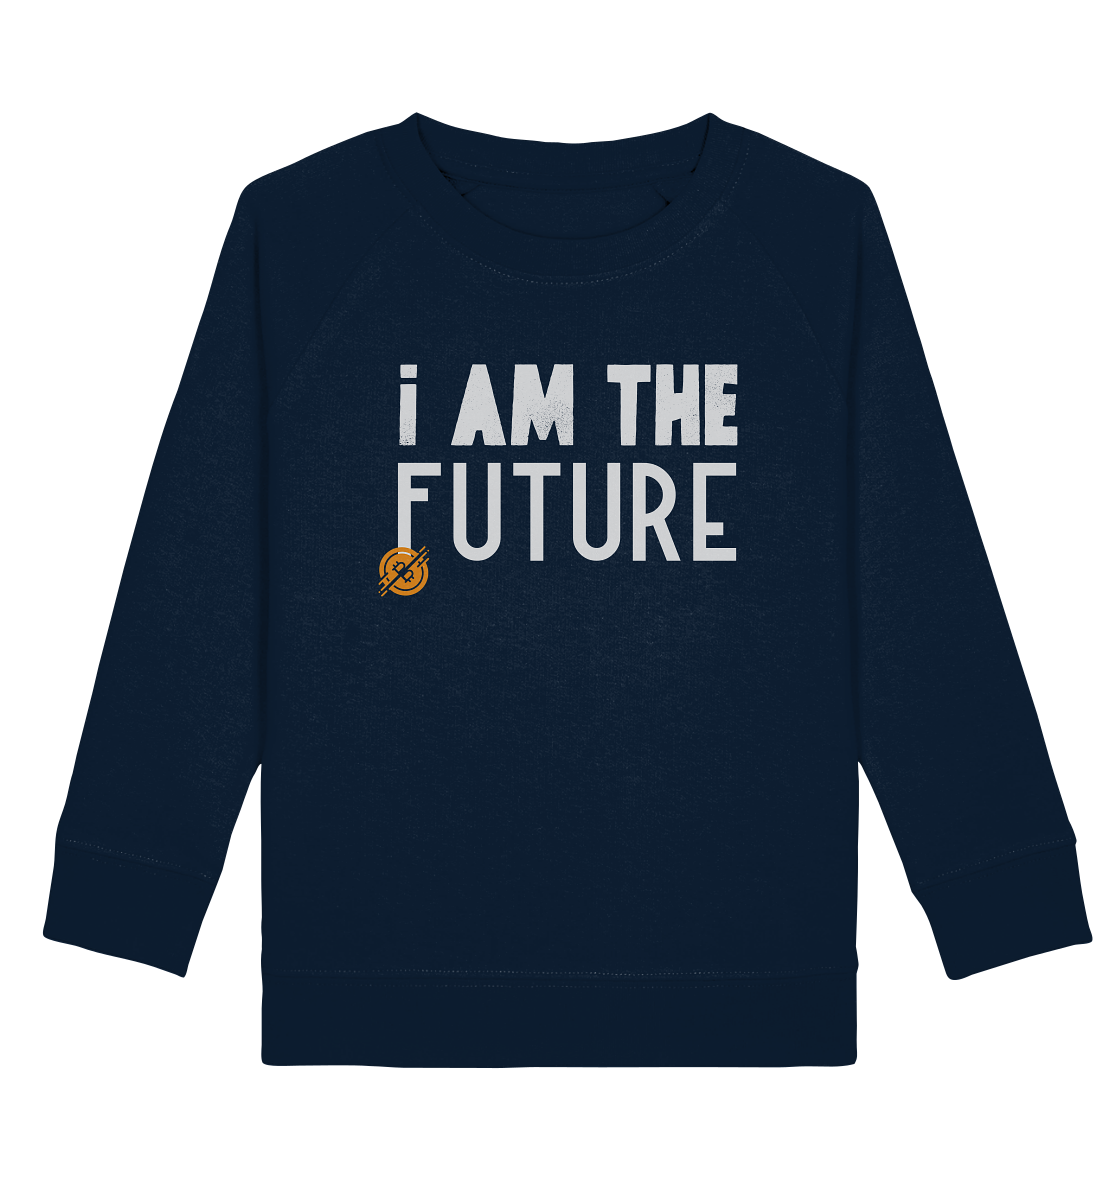 Bitcoin "I am the future" - Kids Organic Sweatshirt